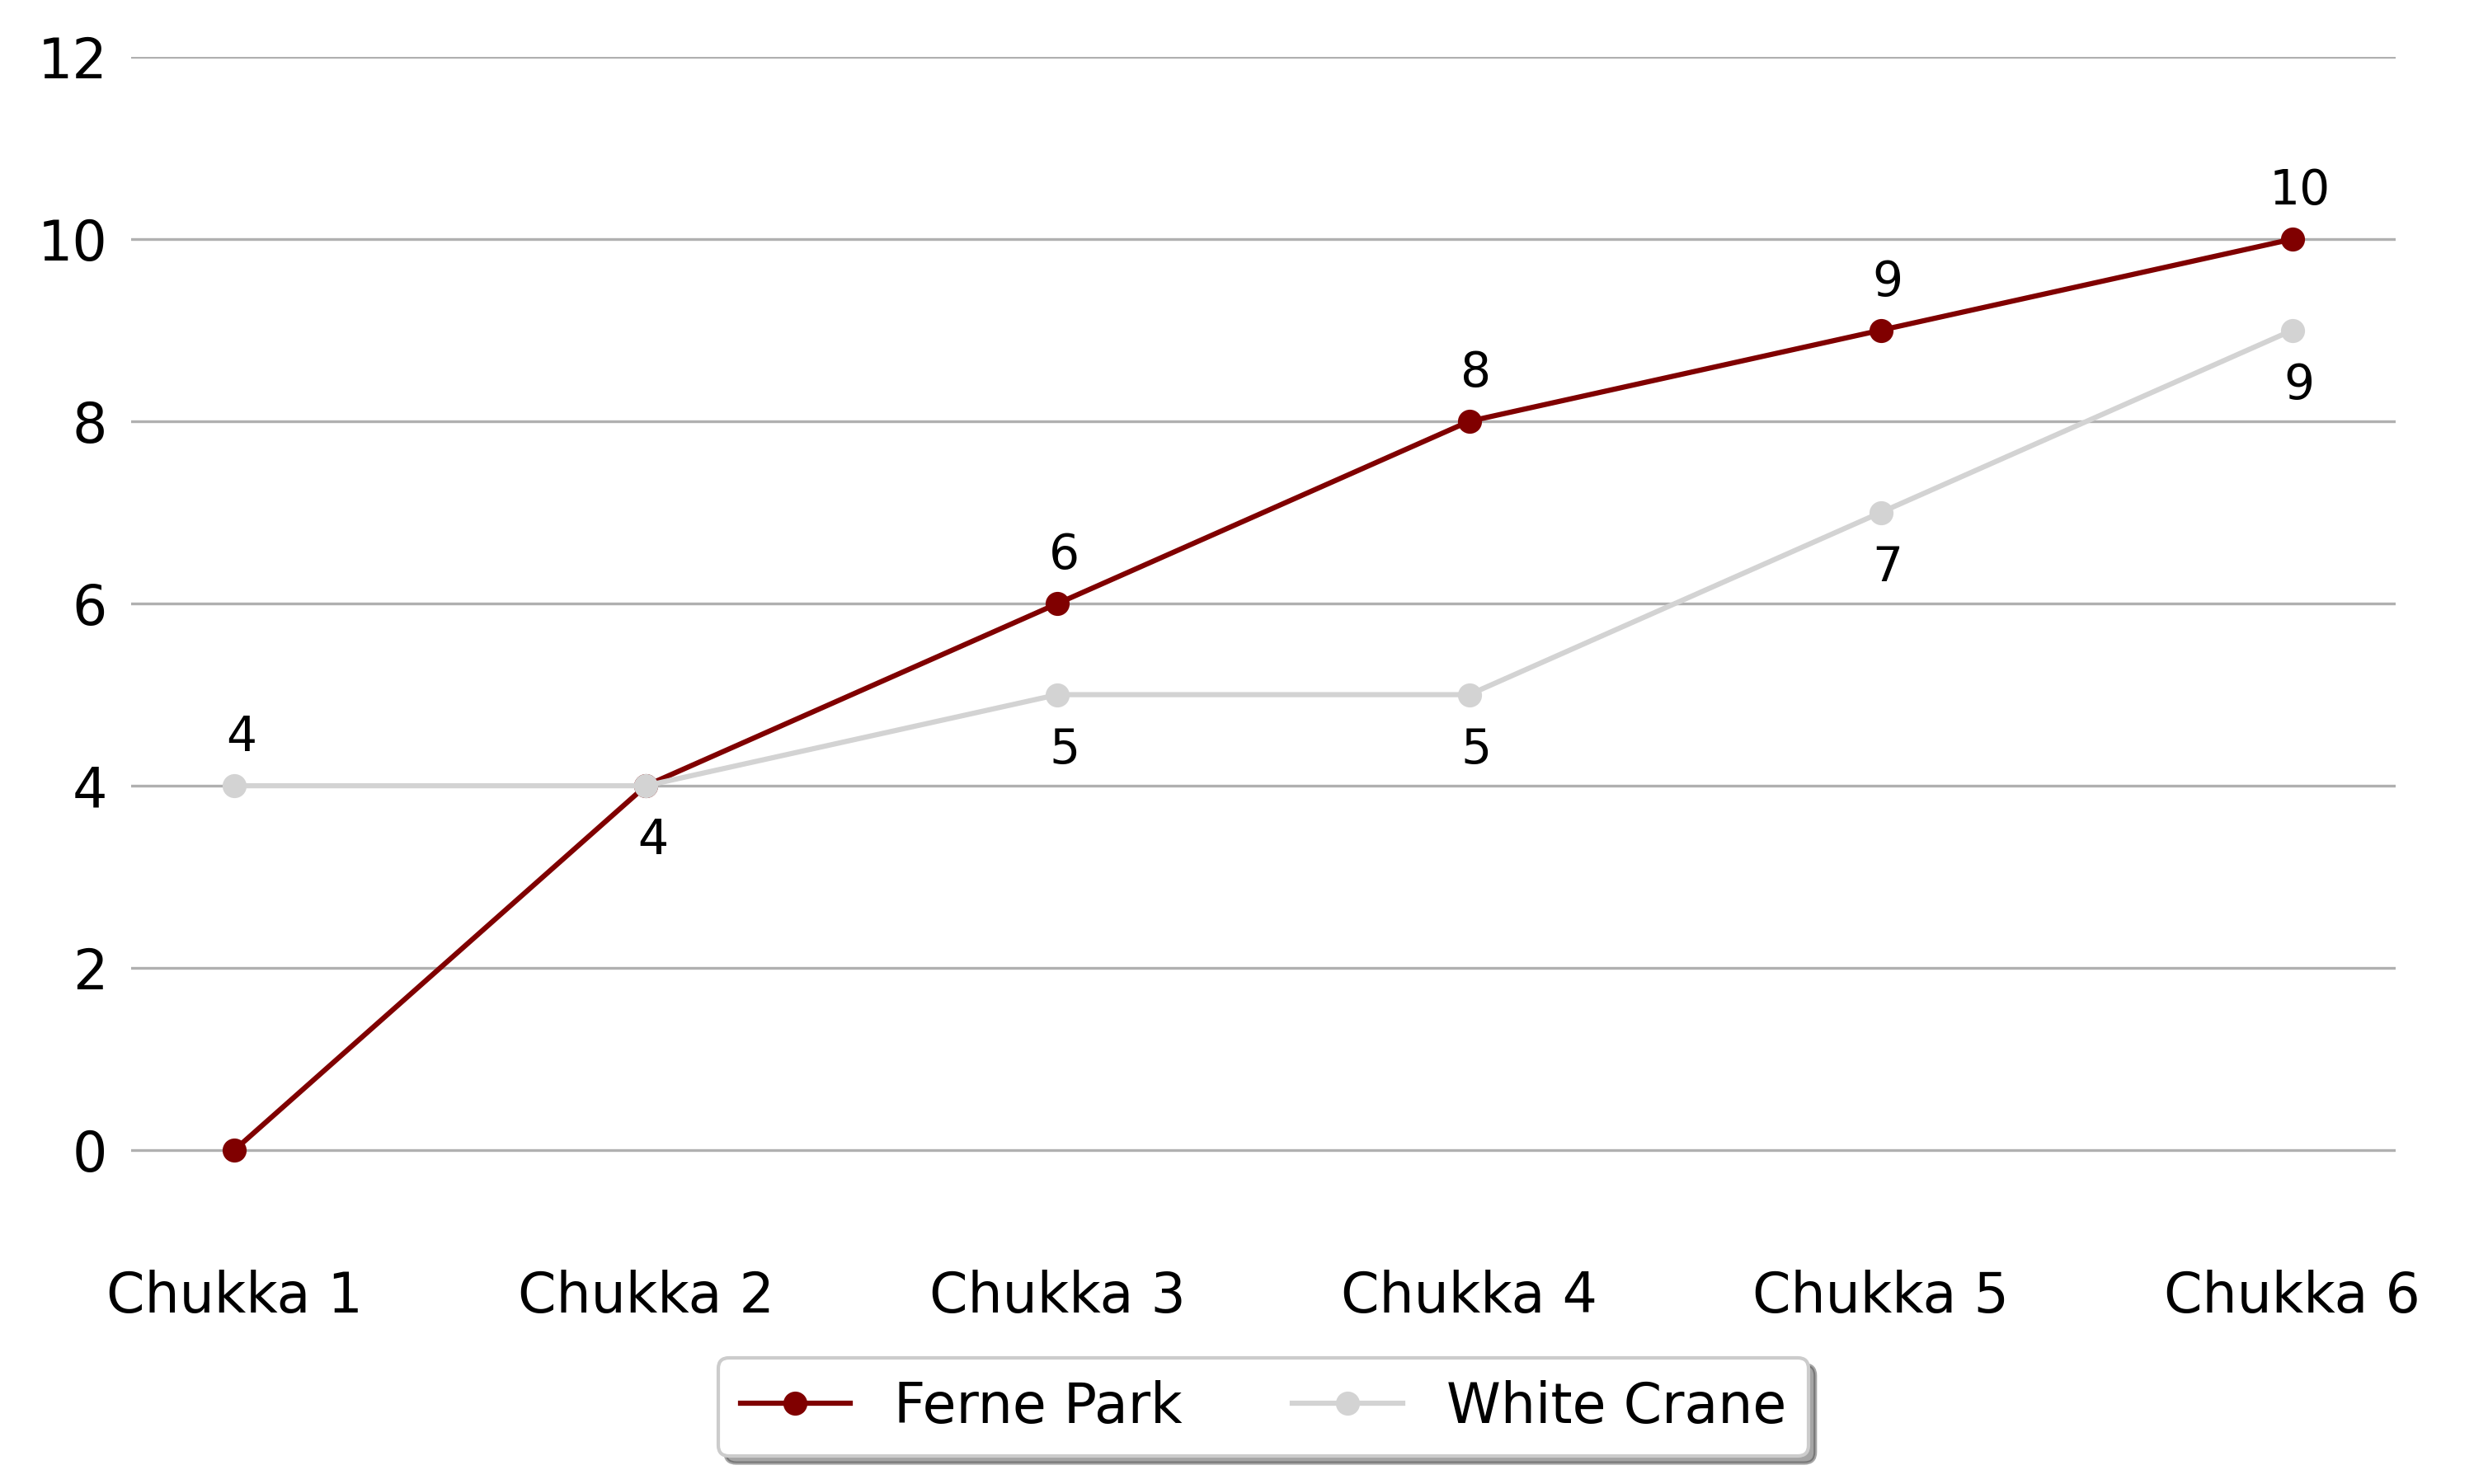 Ferne Park won against White Crane 5